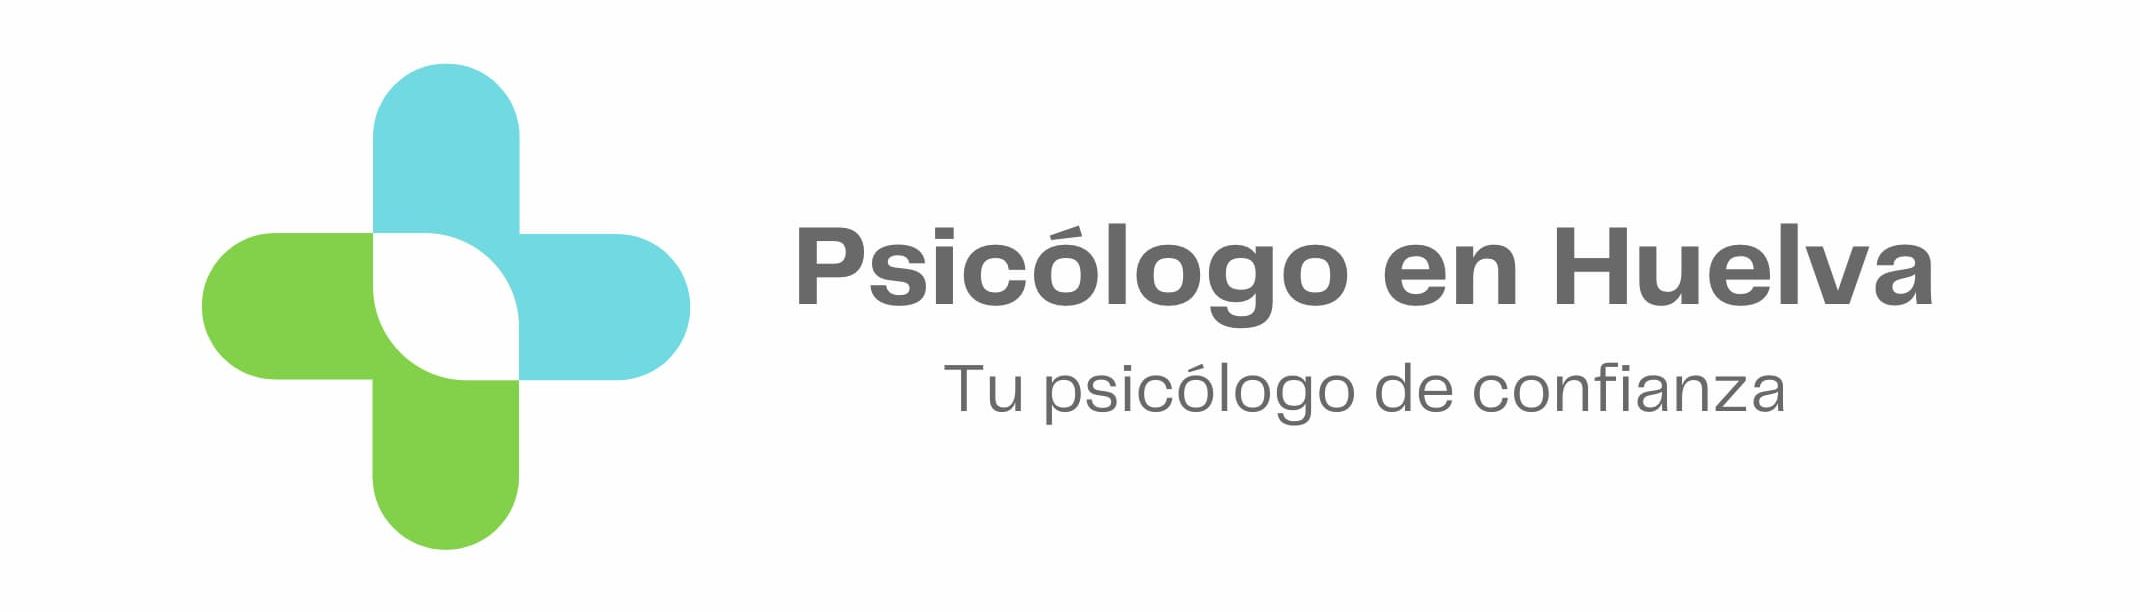 Psicólogo en Huelva